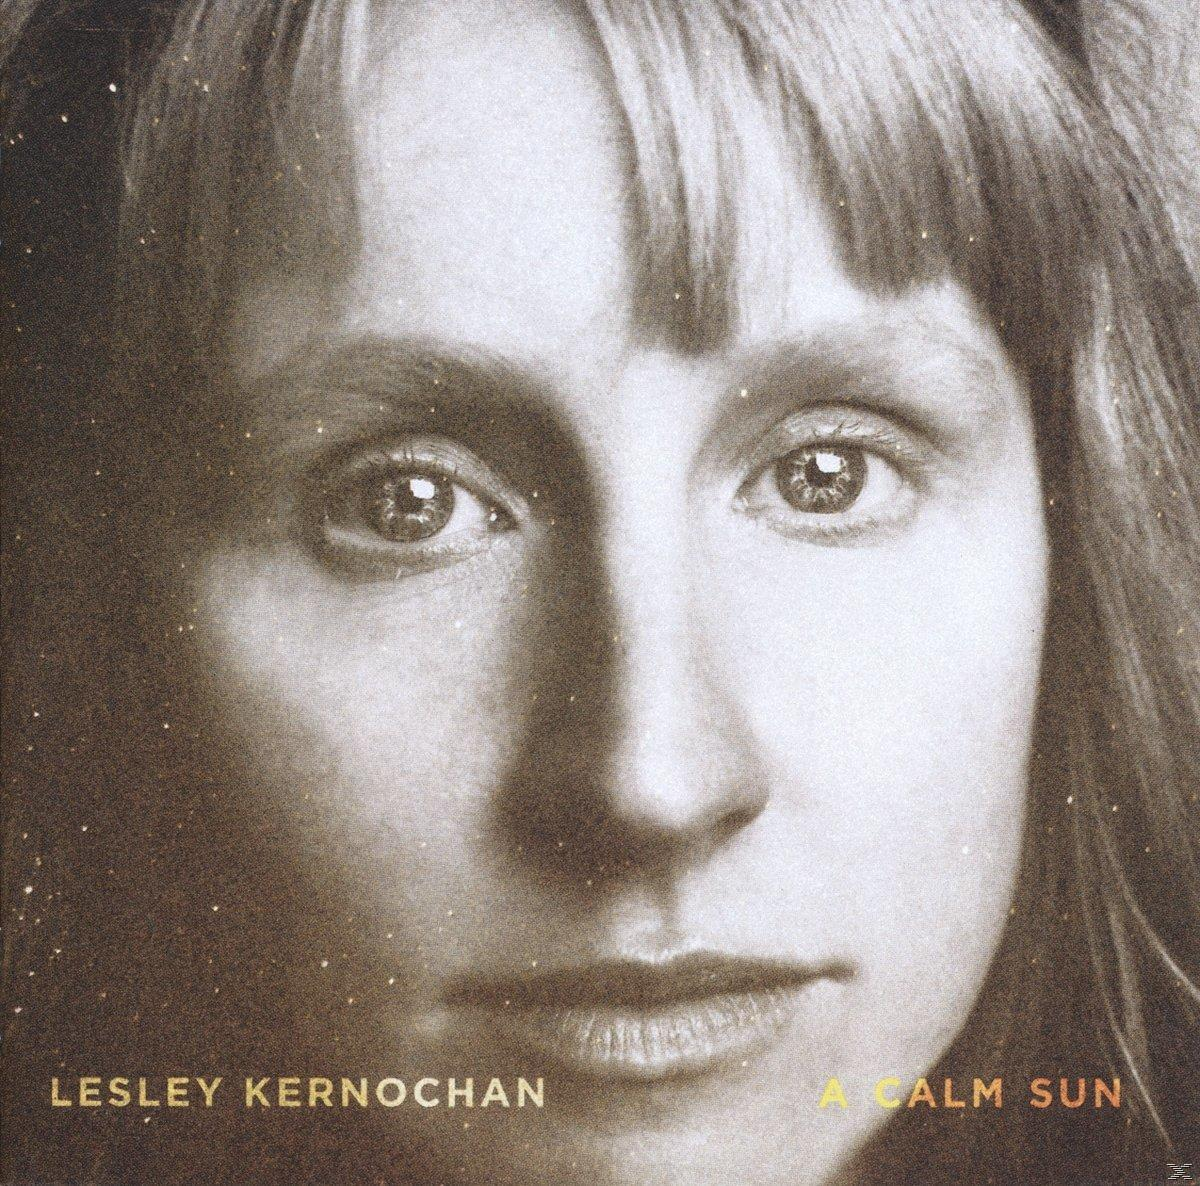 Lesley Kernochan - A (CD) - Calm Sun